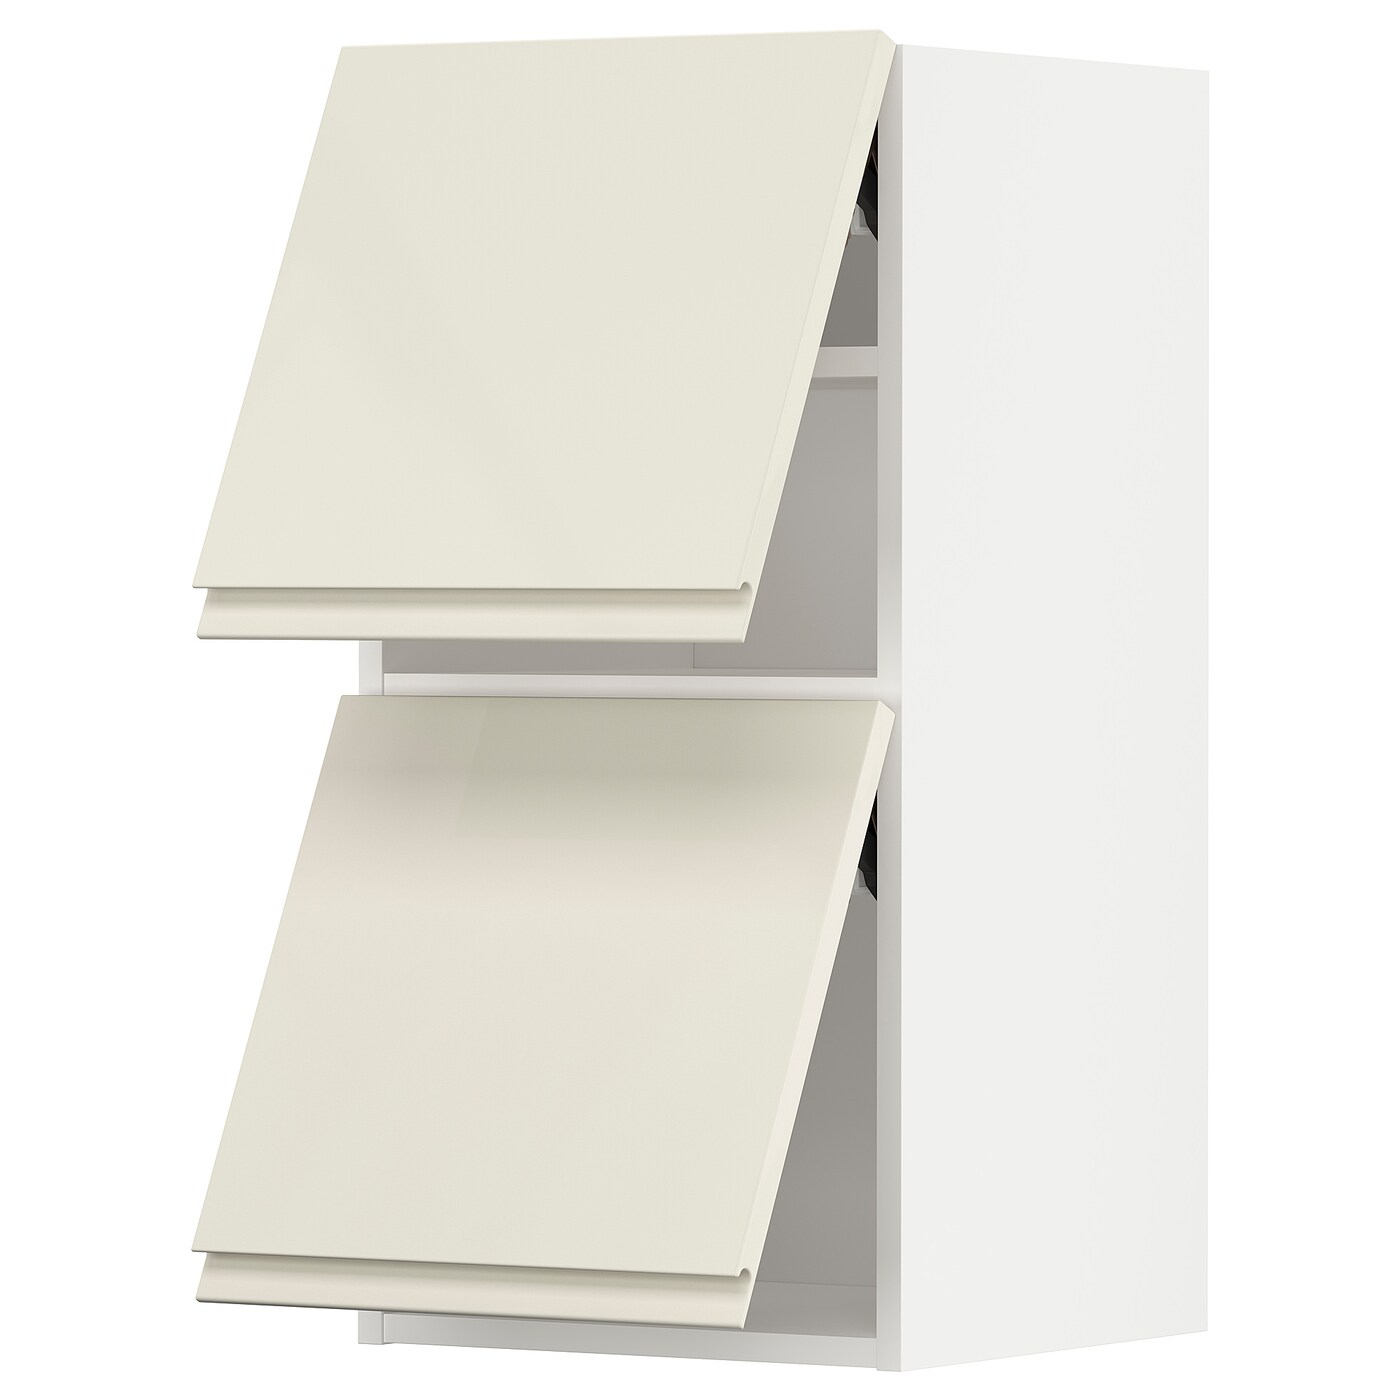 Настенный уровень - IKEA METOD/МЕТОД ИКЕА, 80х40х39,1 см, белый/бежевый глянцевый